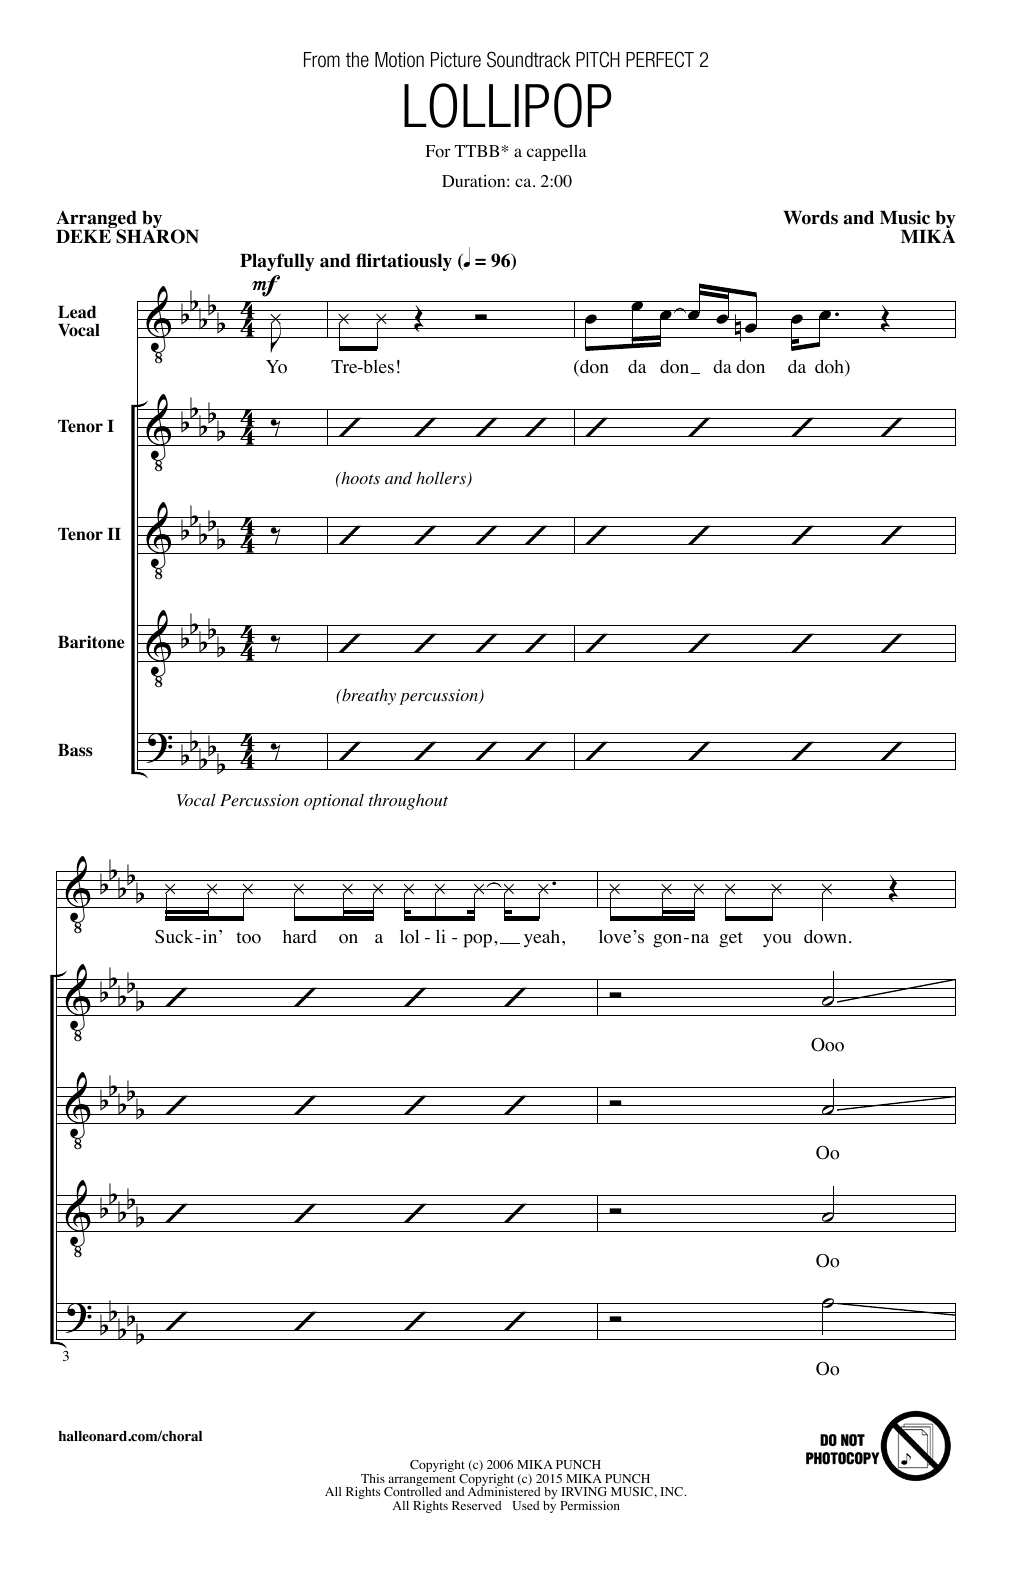 Deke Sharon Lollipop Sheet Music Notes & Chords for Choral - Download or Print PDF